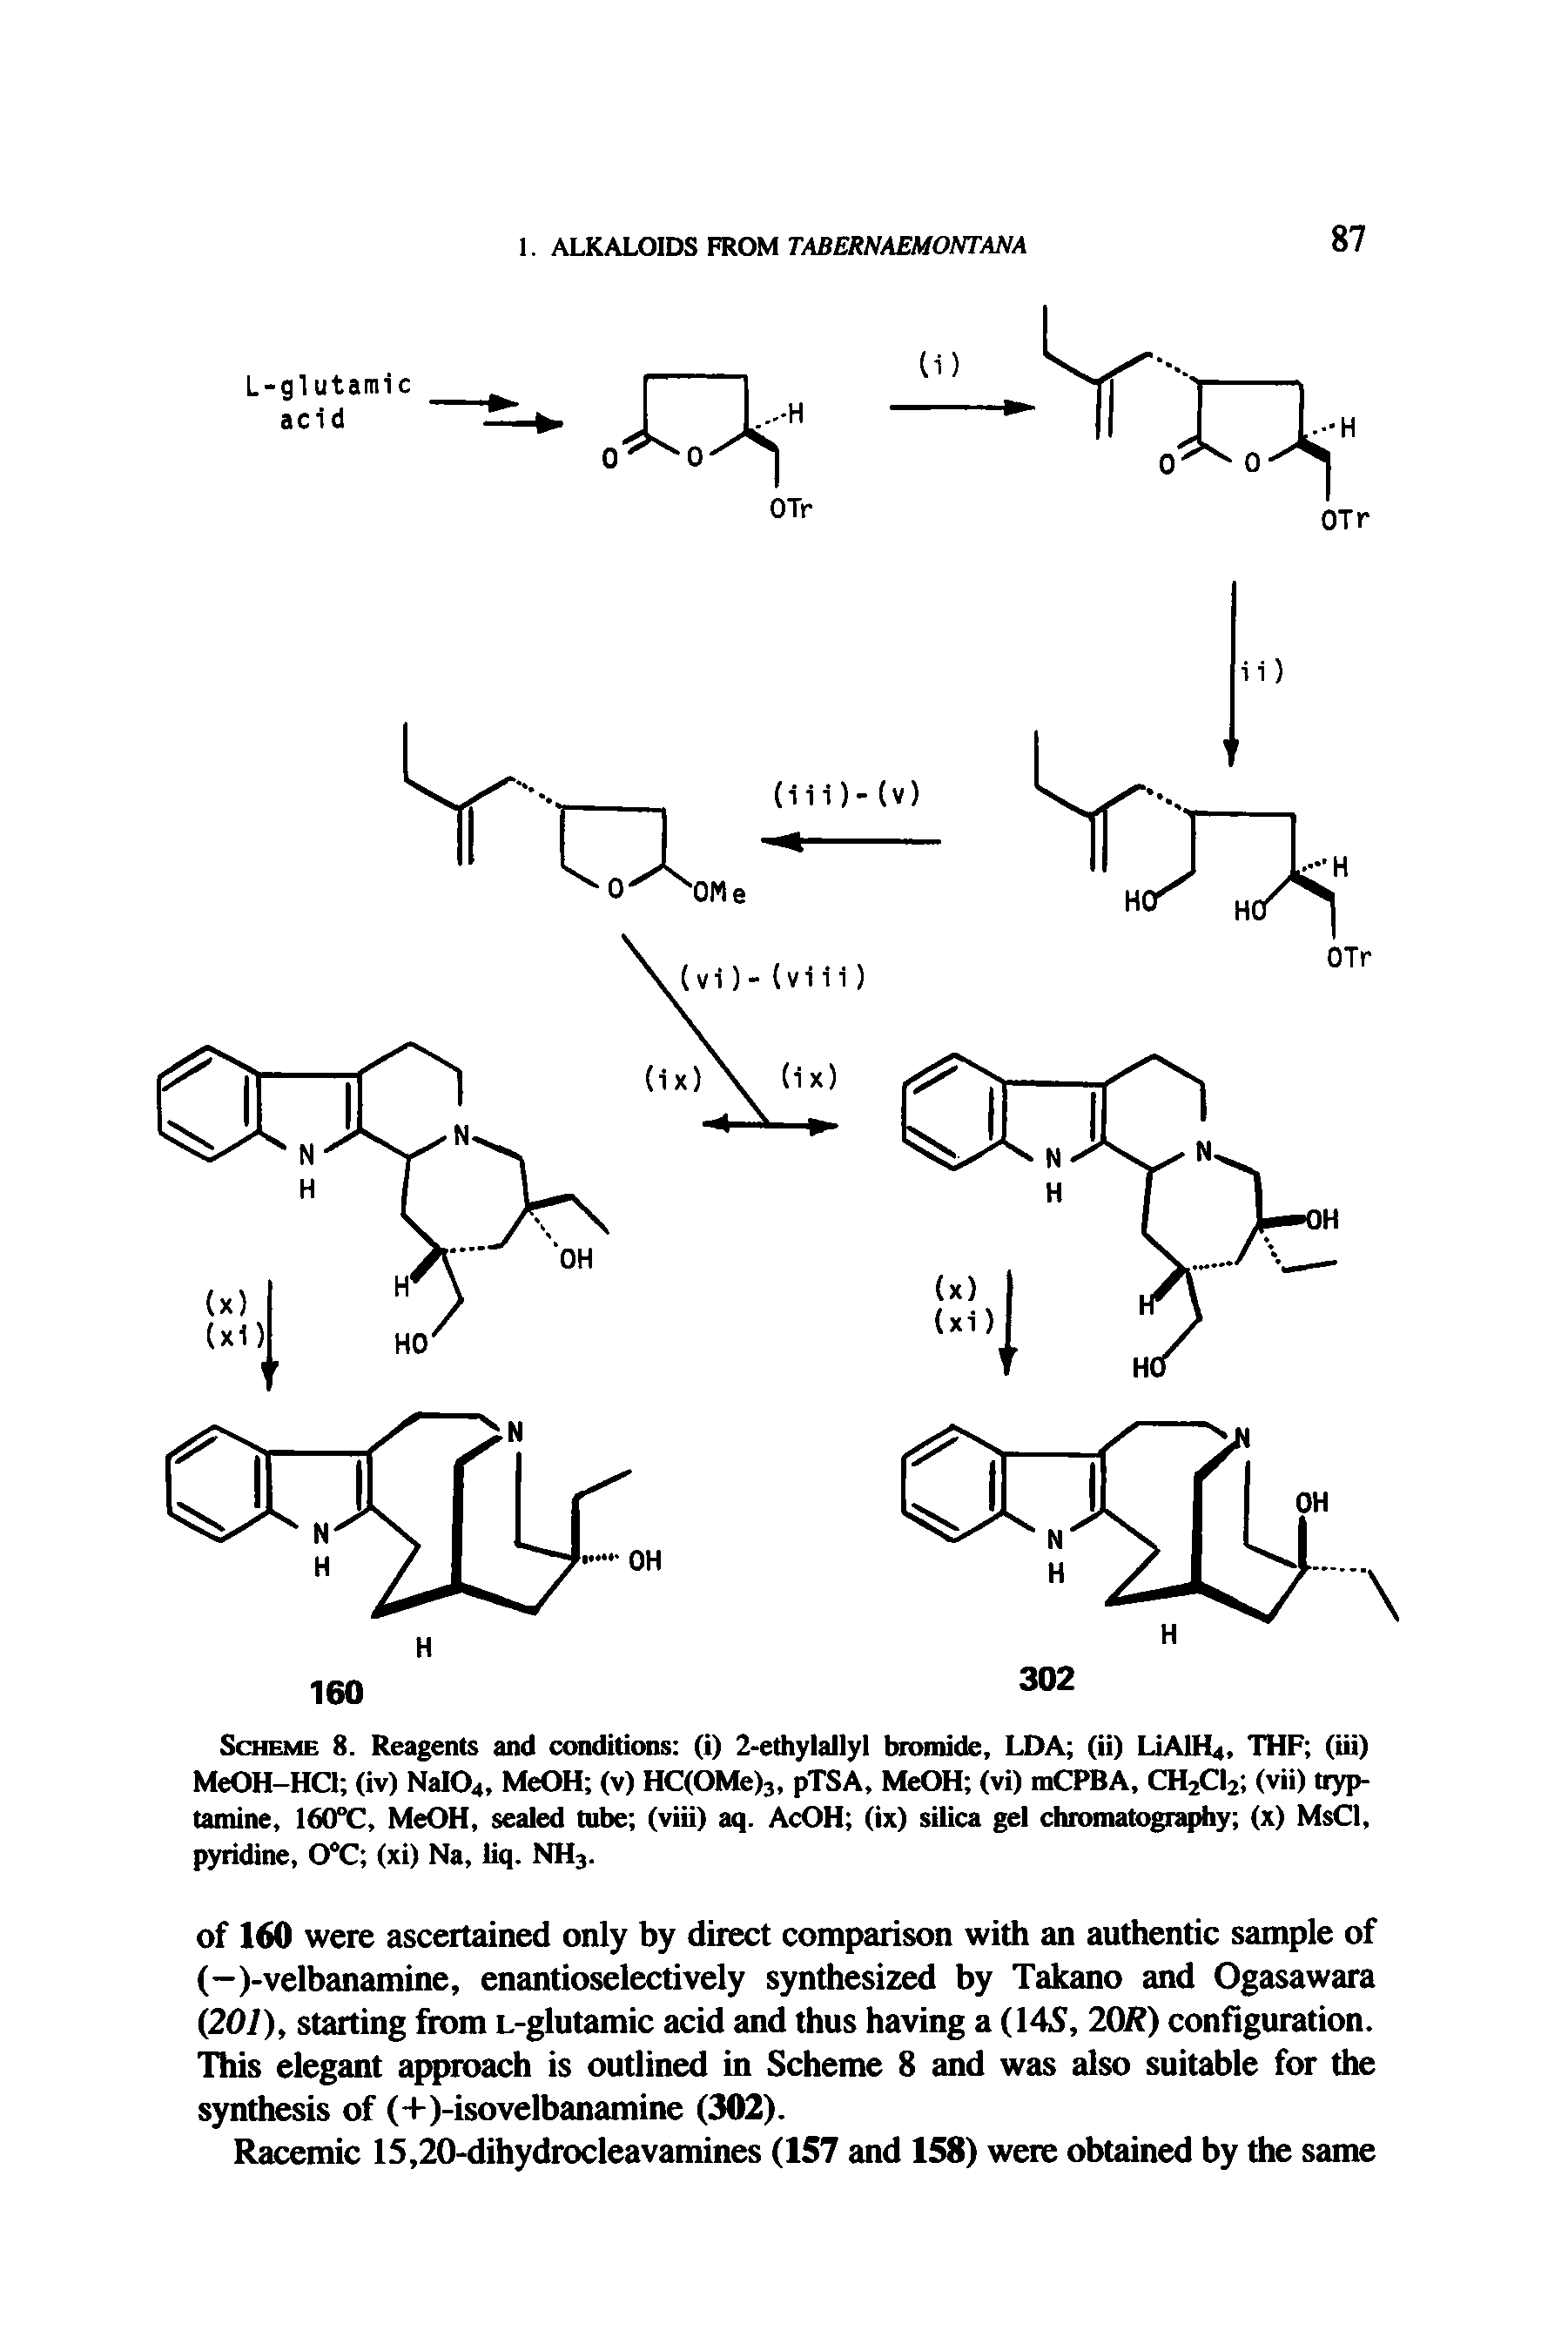 Scheme 8. Reagents and conditions (i) 2-ethylallyl bromide, LDA (ii) LiAlH4, THF (iii) MeOH-HCl (iv) NaI04, MeOH (v) HC(OMe)3, pTSA, MeOH (vi) mCPBA, CH2CI2 (vii) tryp-tamine, 160°C, MeOH, sealed tube (viii) aq. AcOH (ix) silica gel chromatography (x) MsCl, pyridine, 0°C (xi) Na, liq. NH3.